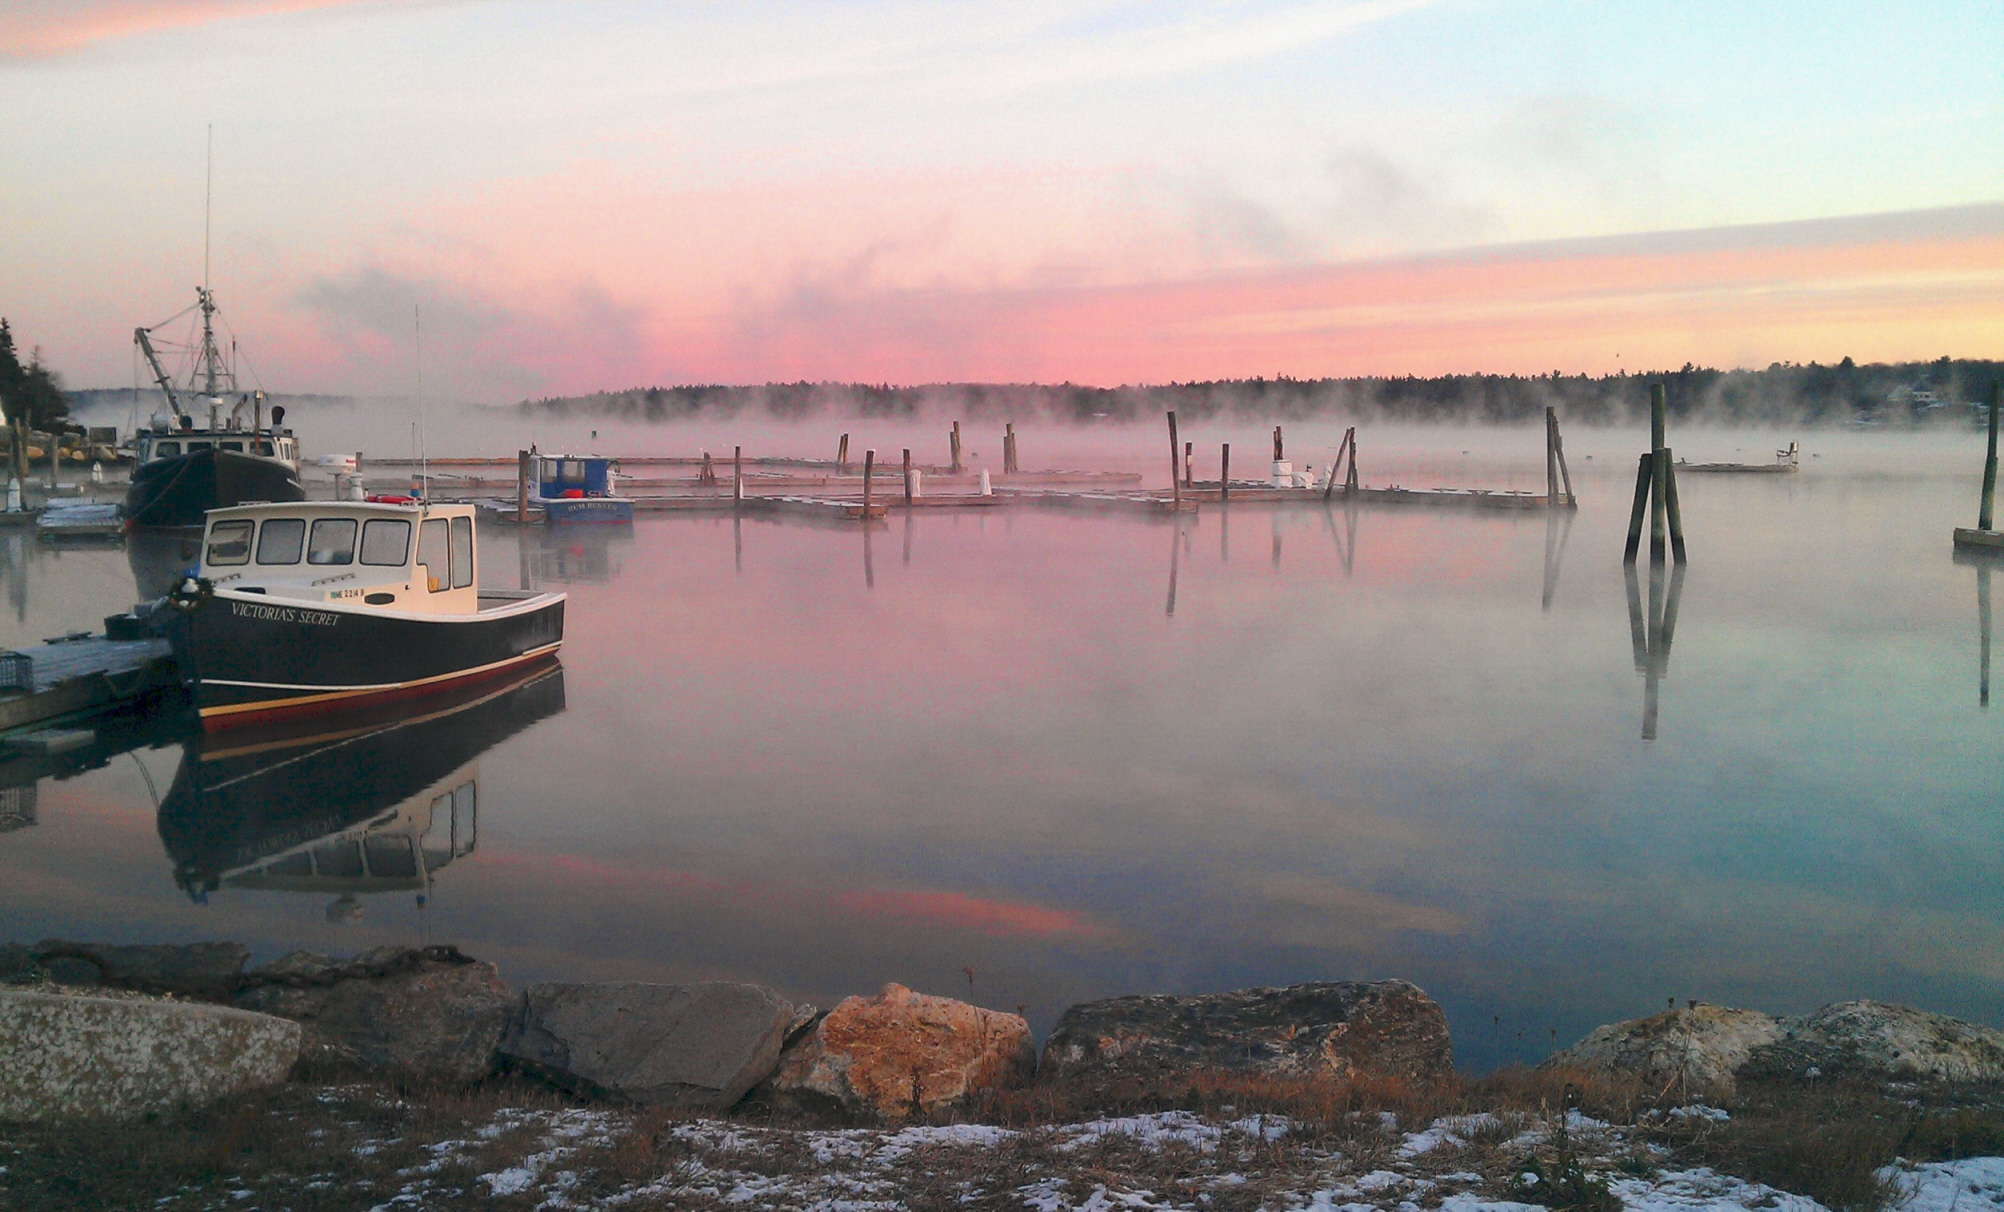 Foggy, Winter Coastline Sunrise (user submitted)